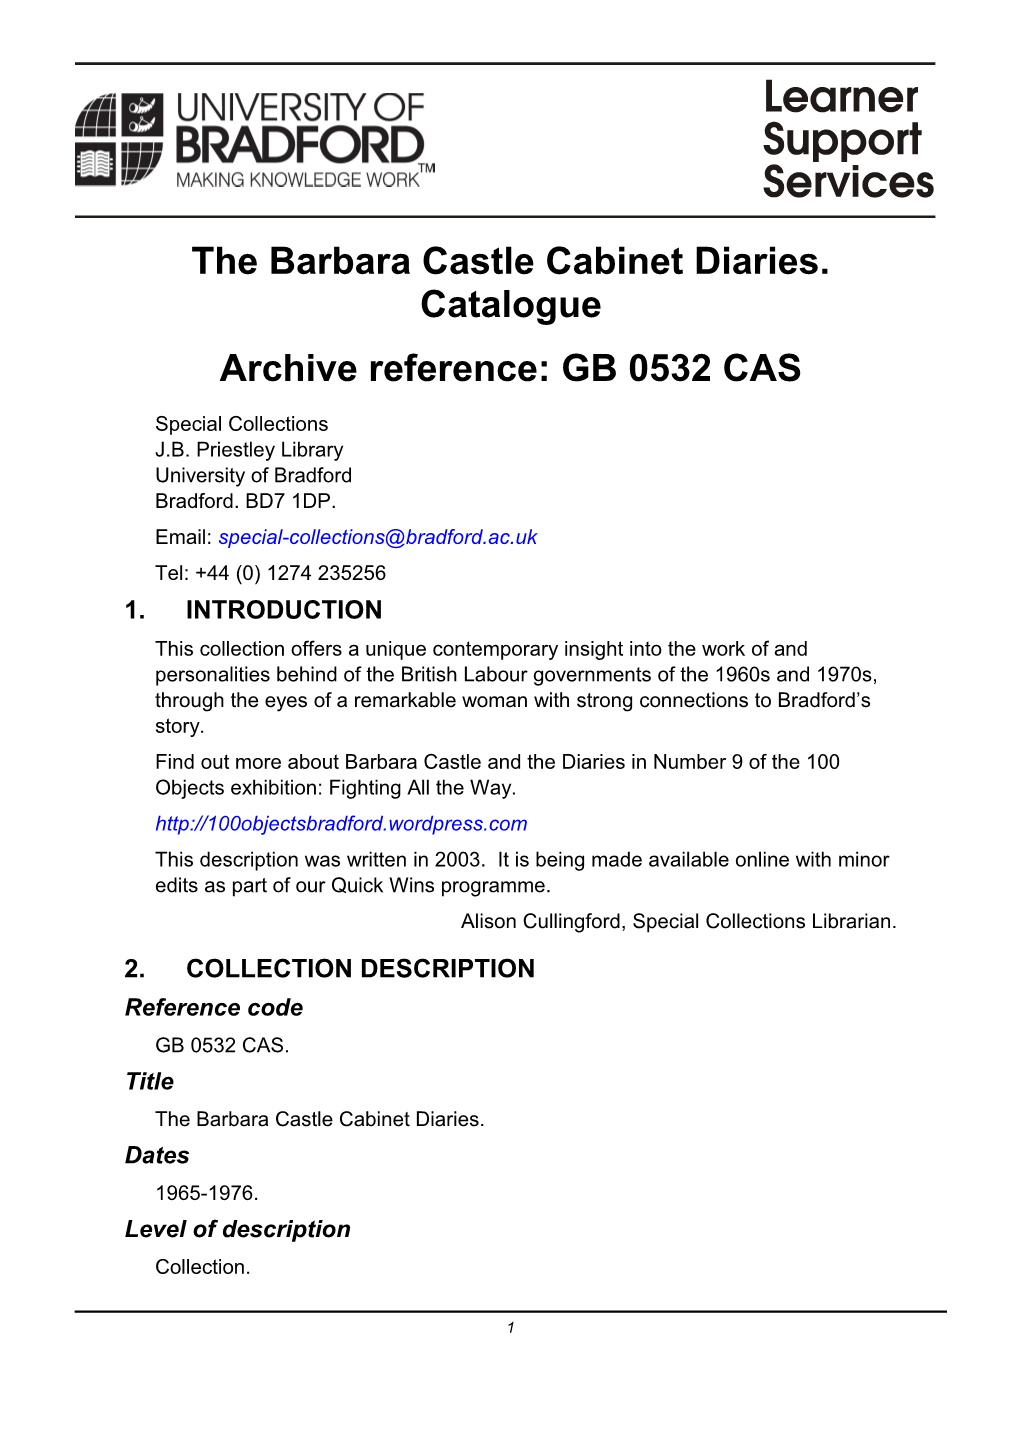 Barbara Castle Cabinet Diaries Description, Special Collections